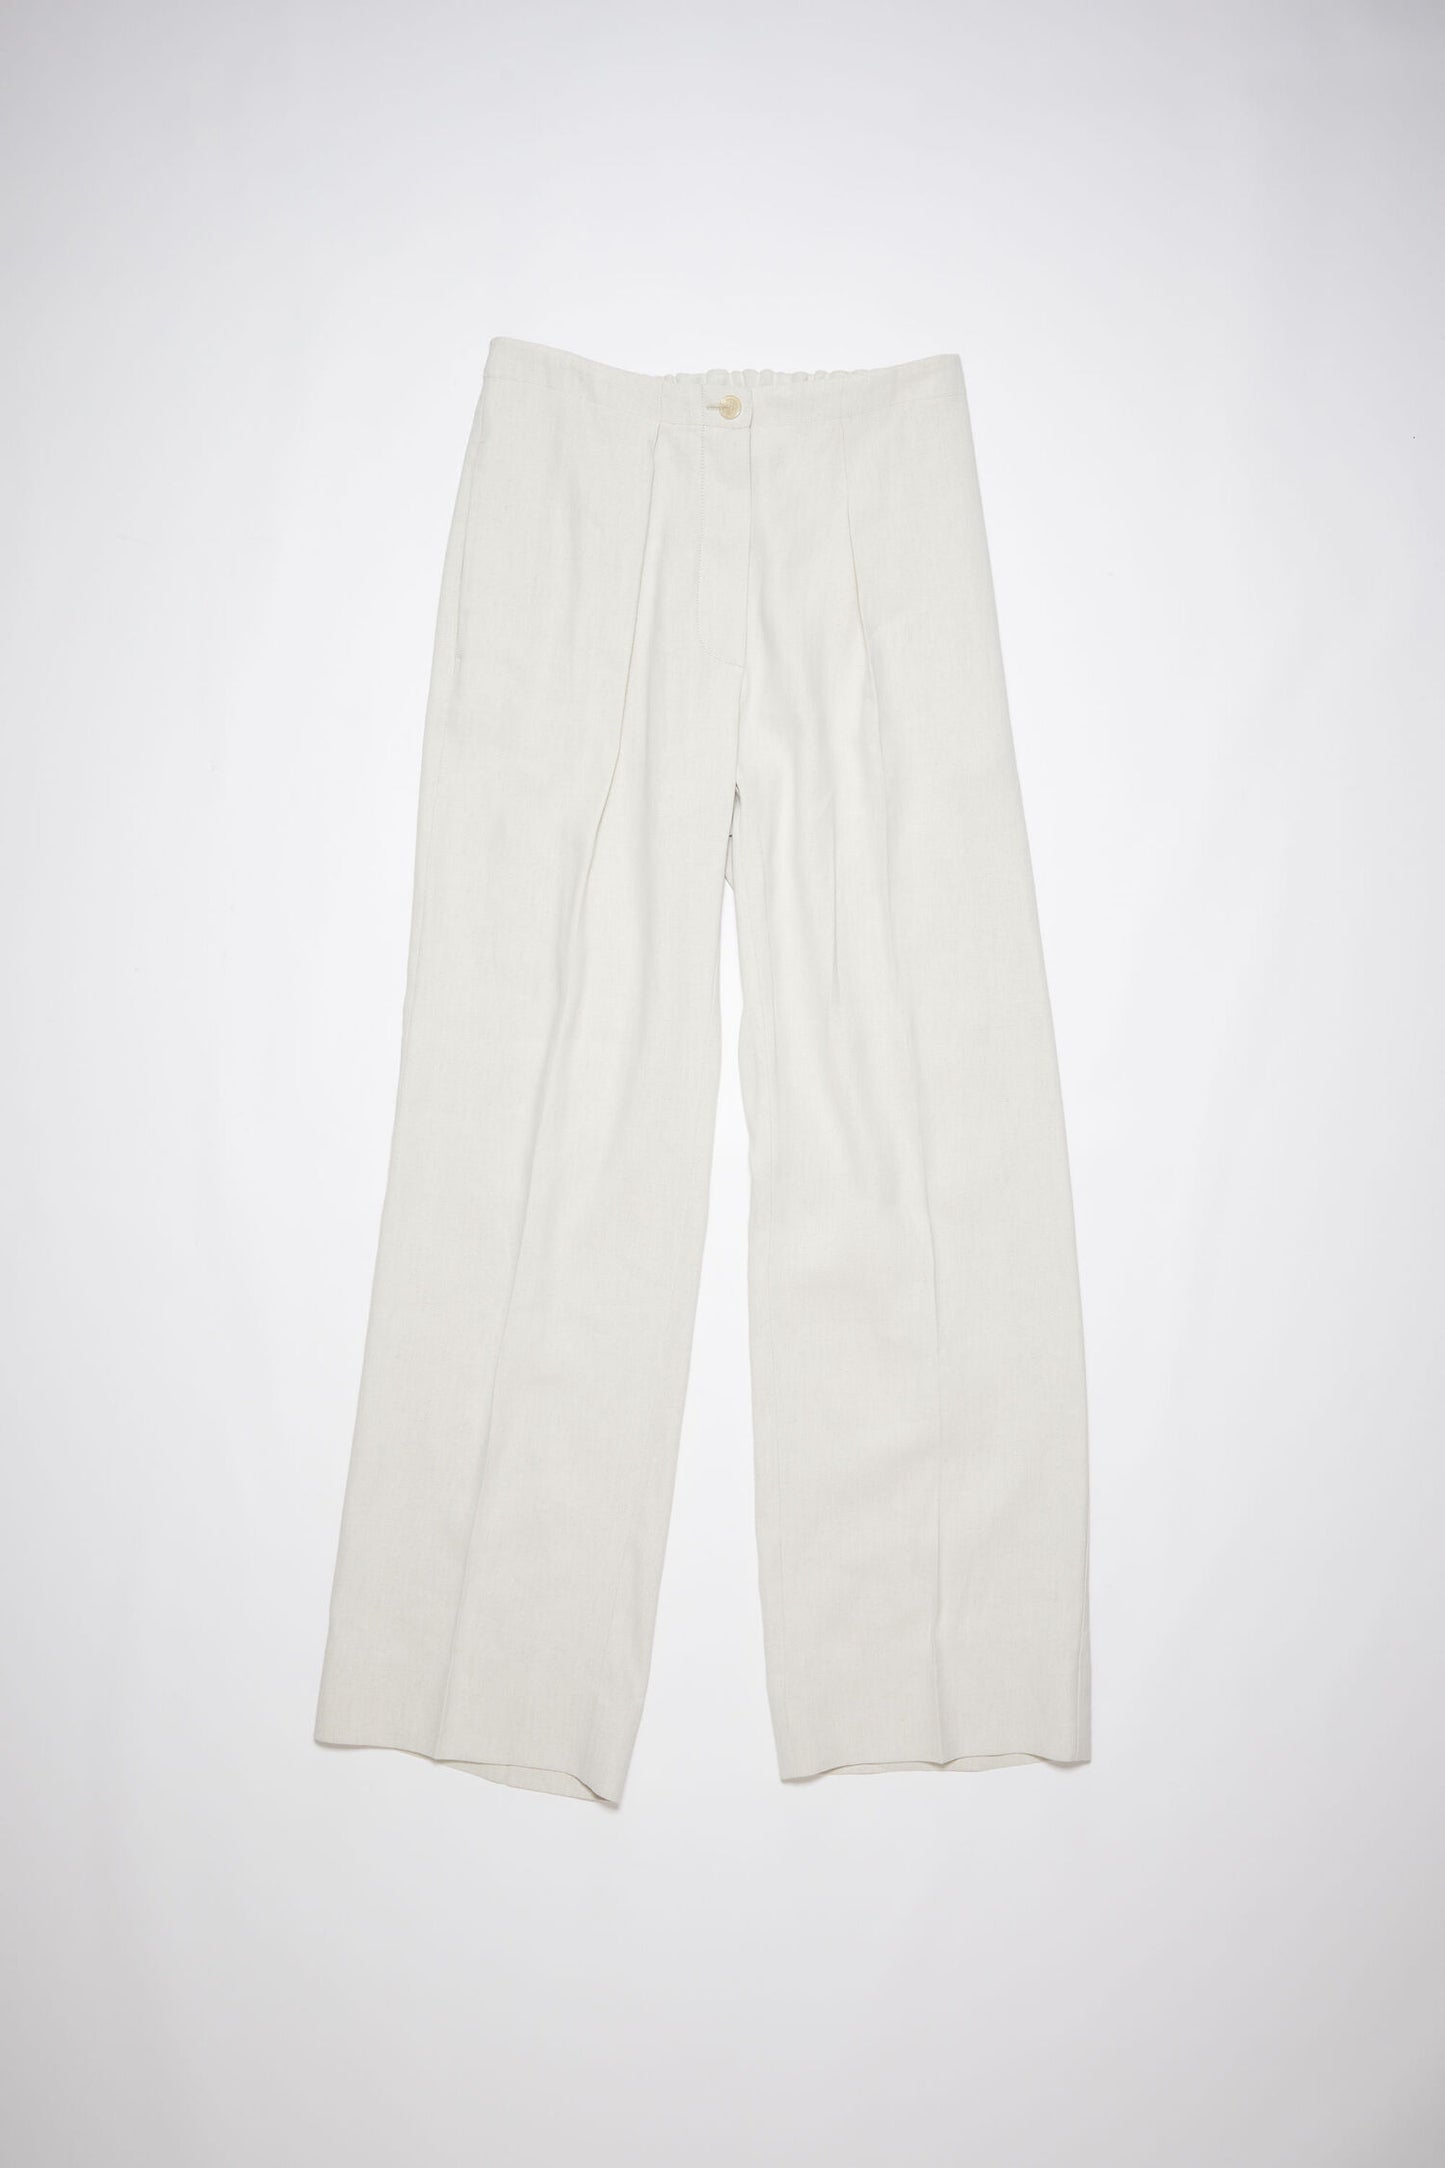 Linen Trousers, Cream White, Pants